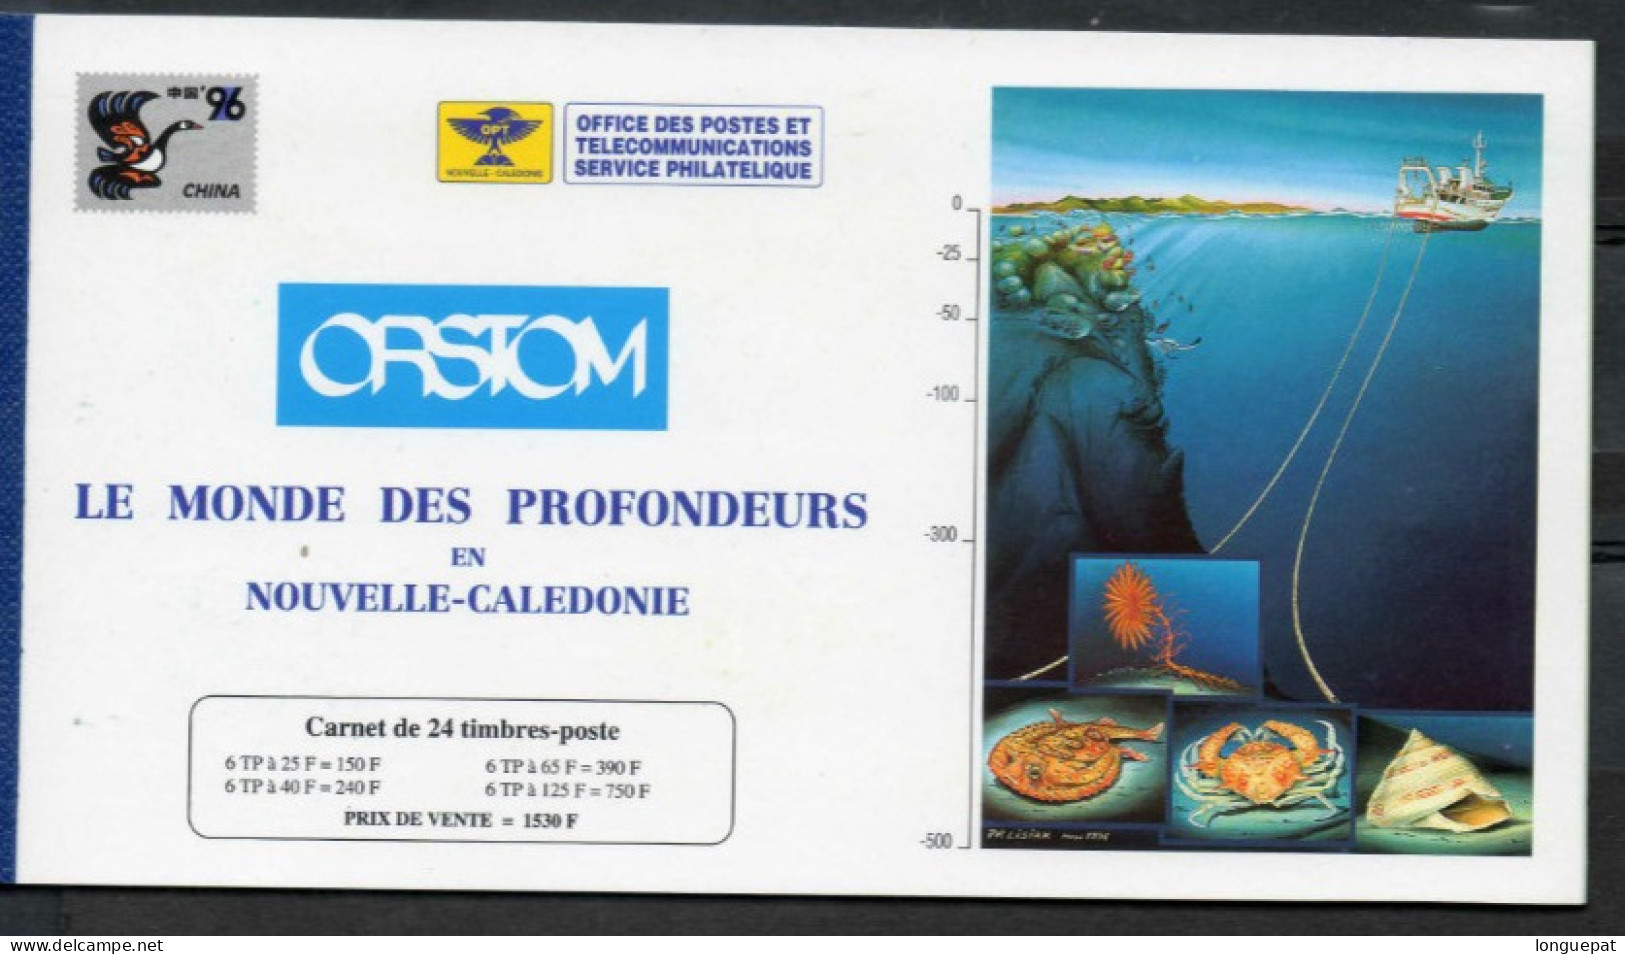 Nelle CALEDONIE : Faune Marine : Poisson, Coquillage, Crabe, Etc - "China 96" Exposition Philatélique - - Booklets